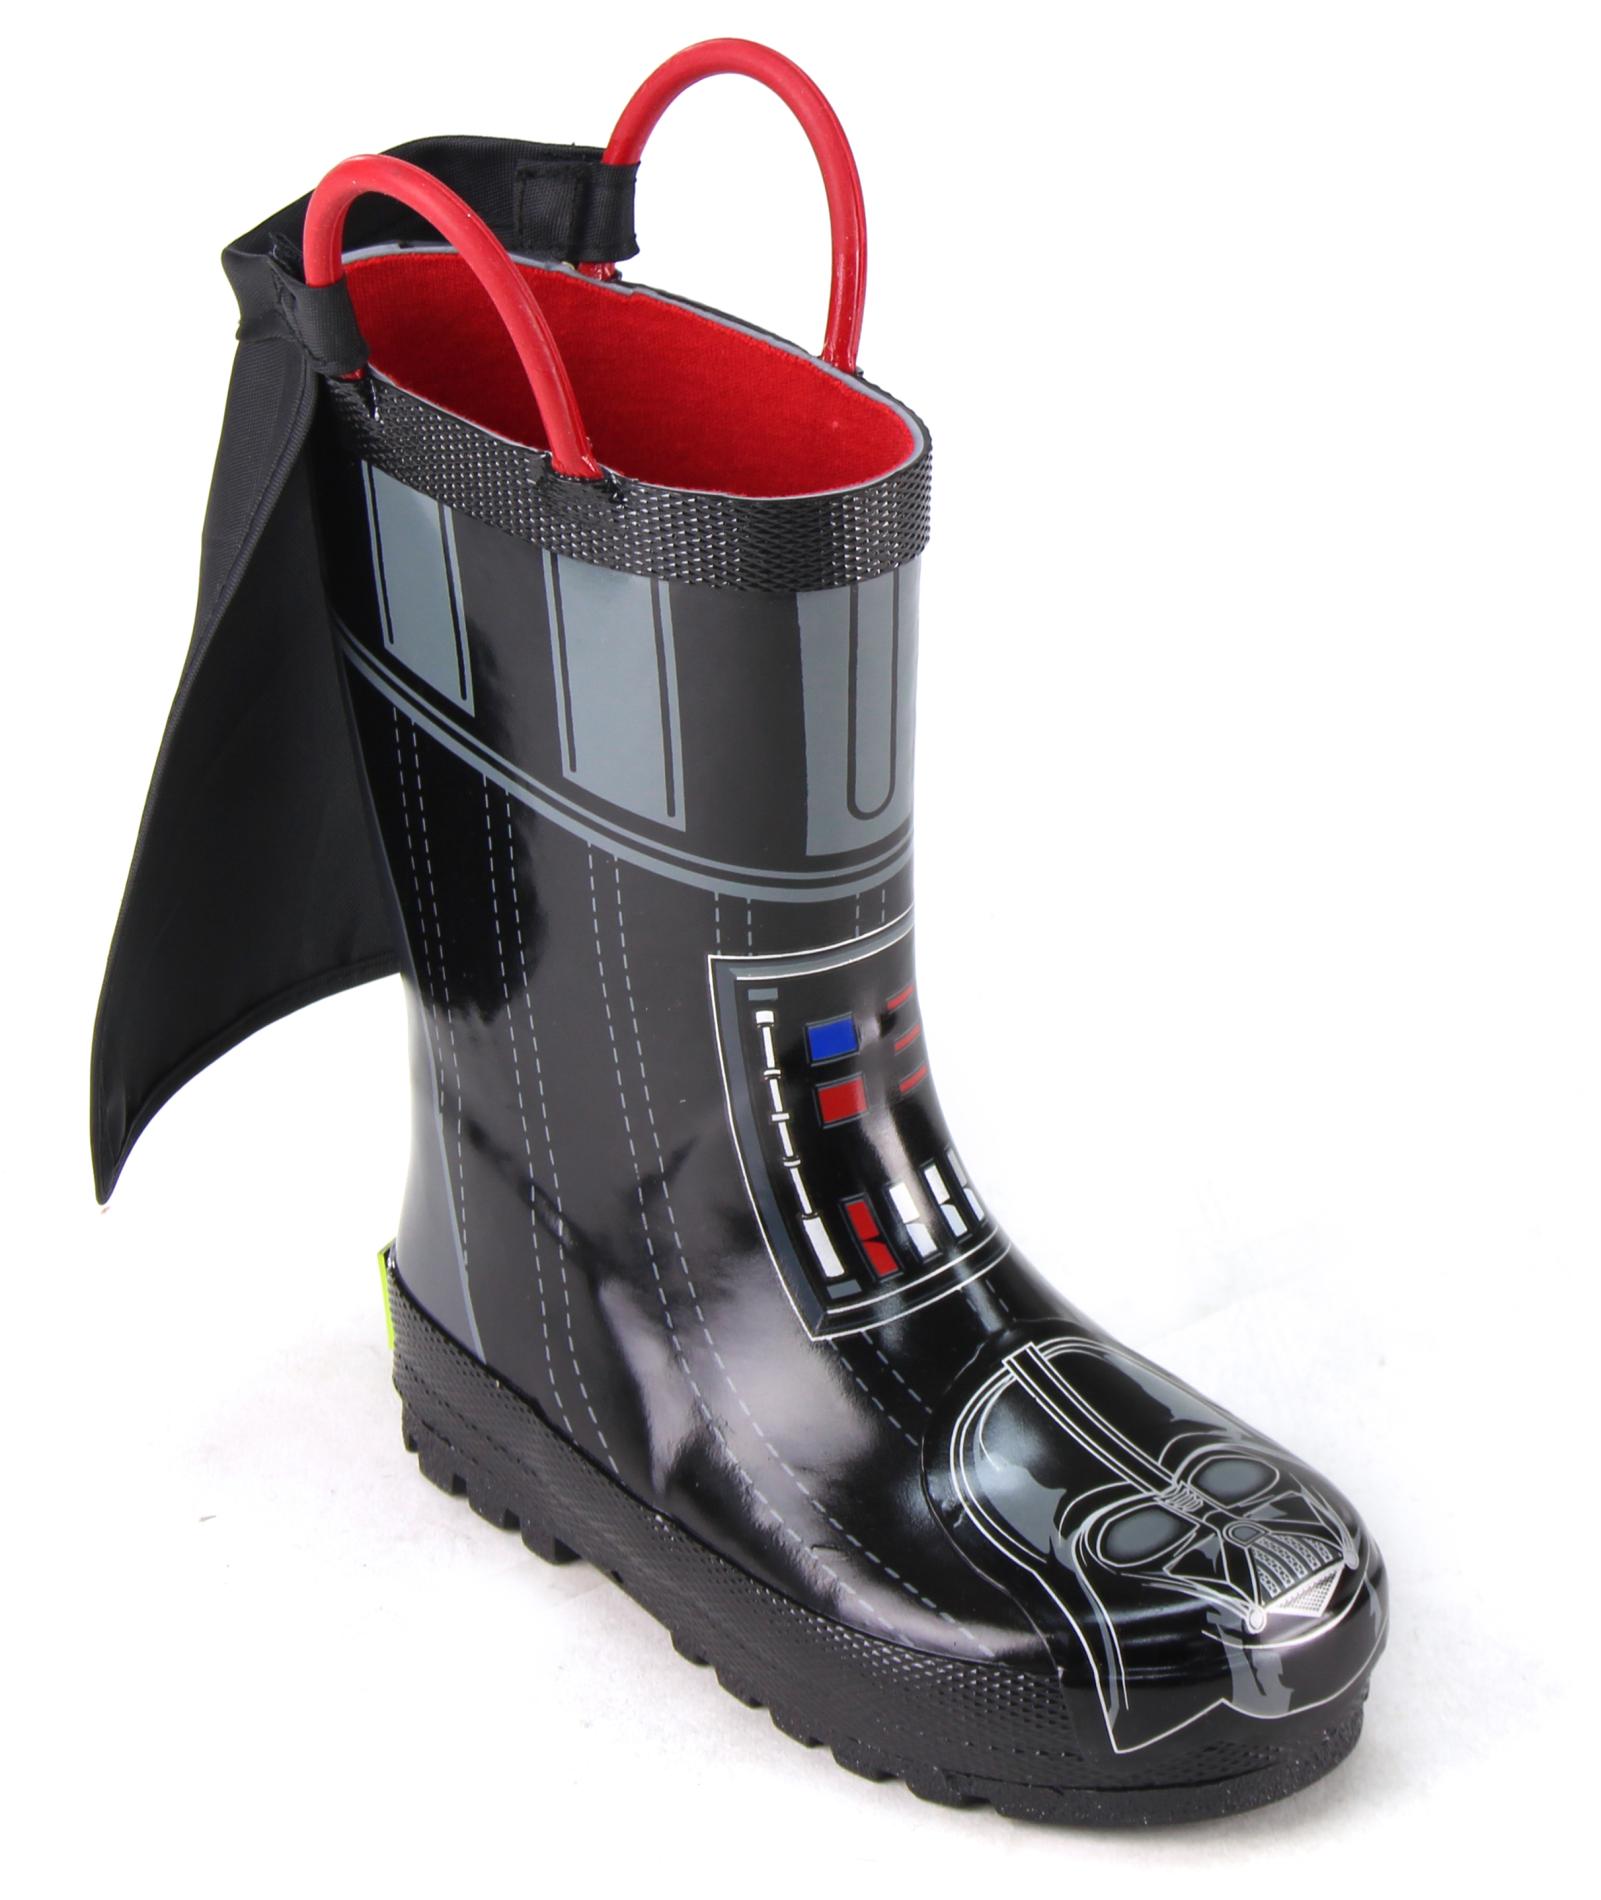 Star Wars Toddler Boy's Black Rain Boot - Darth Vader